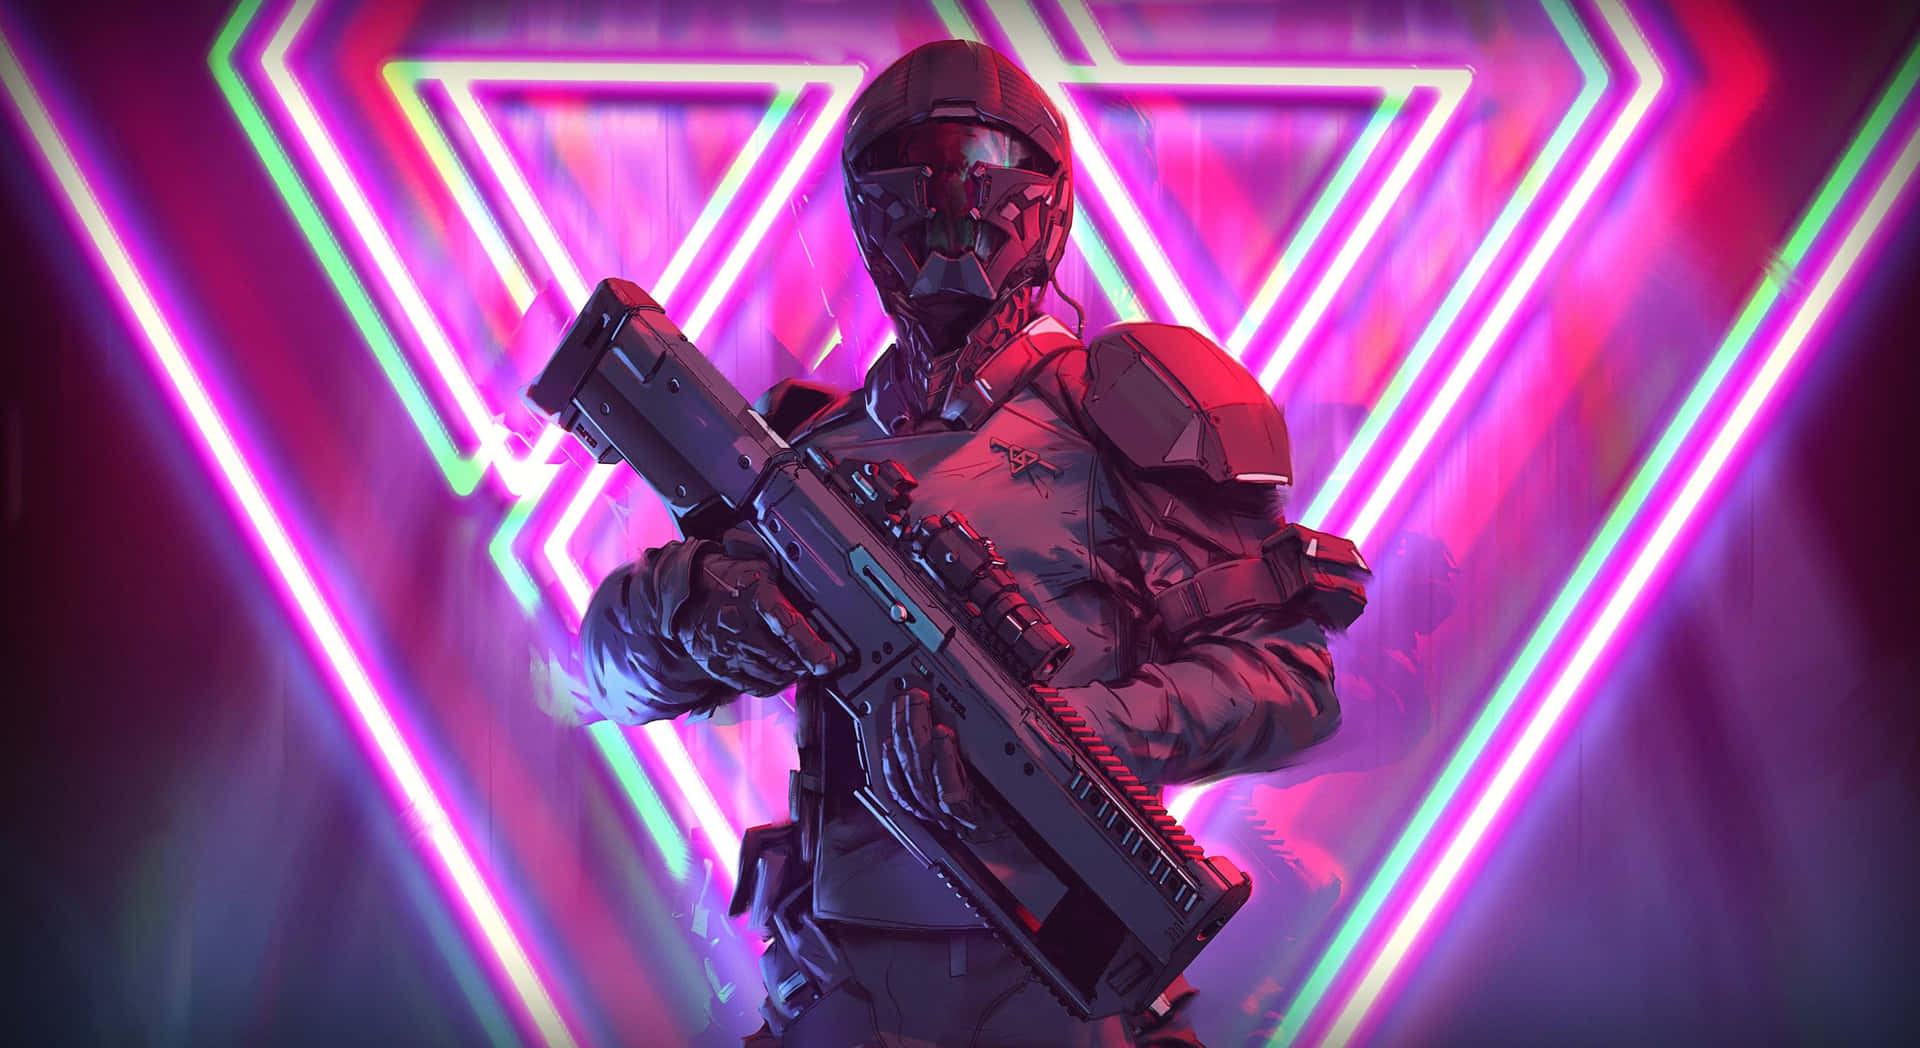 A Man In A Suit With A Gun In Front Of A Neon Background Wallpaper